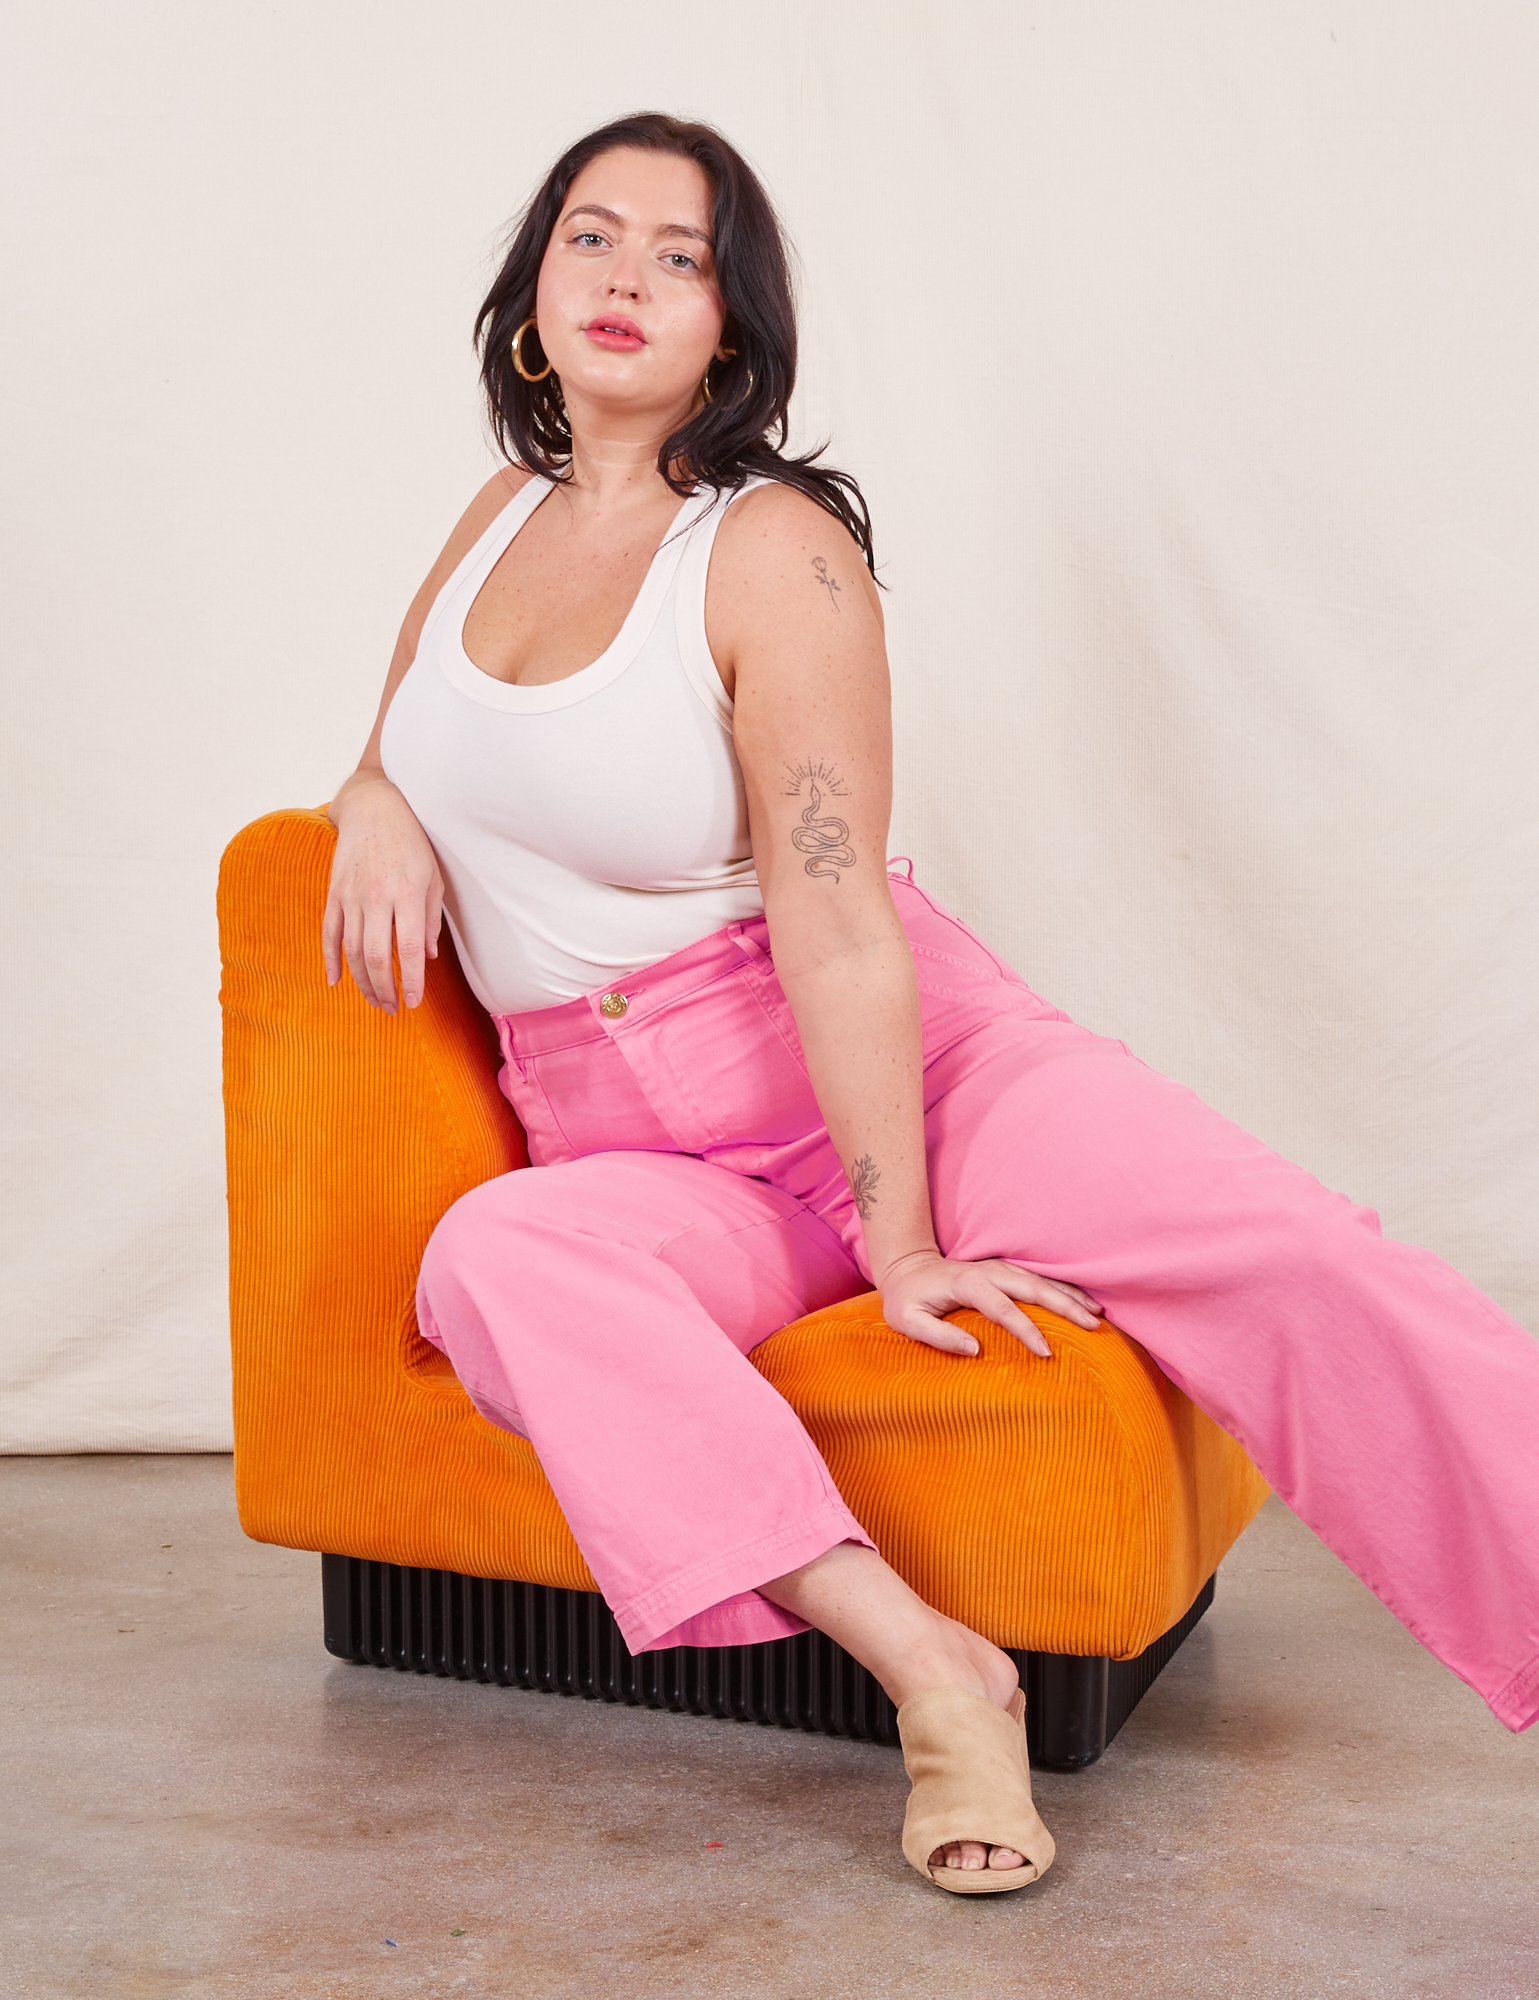 Work Pants in Bubblegum Pink on Faye wearing Tank Top in vintage tee off-white sitting in orange chair